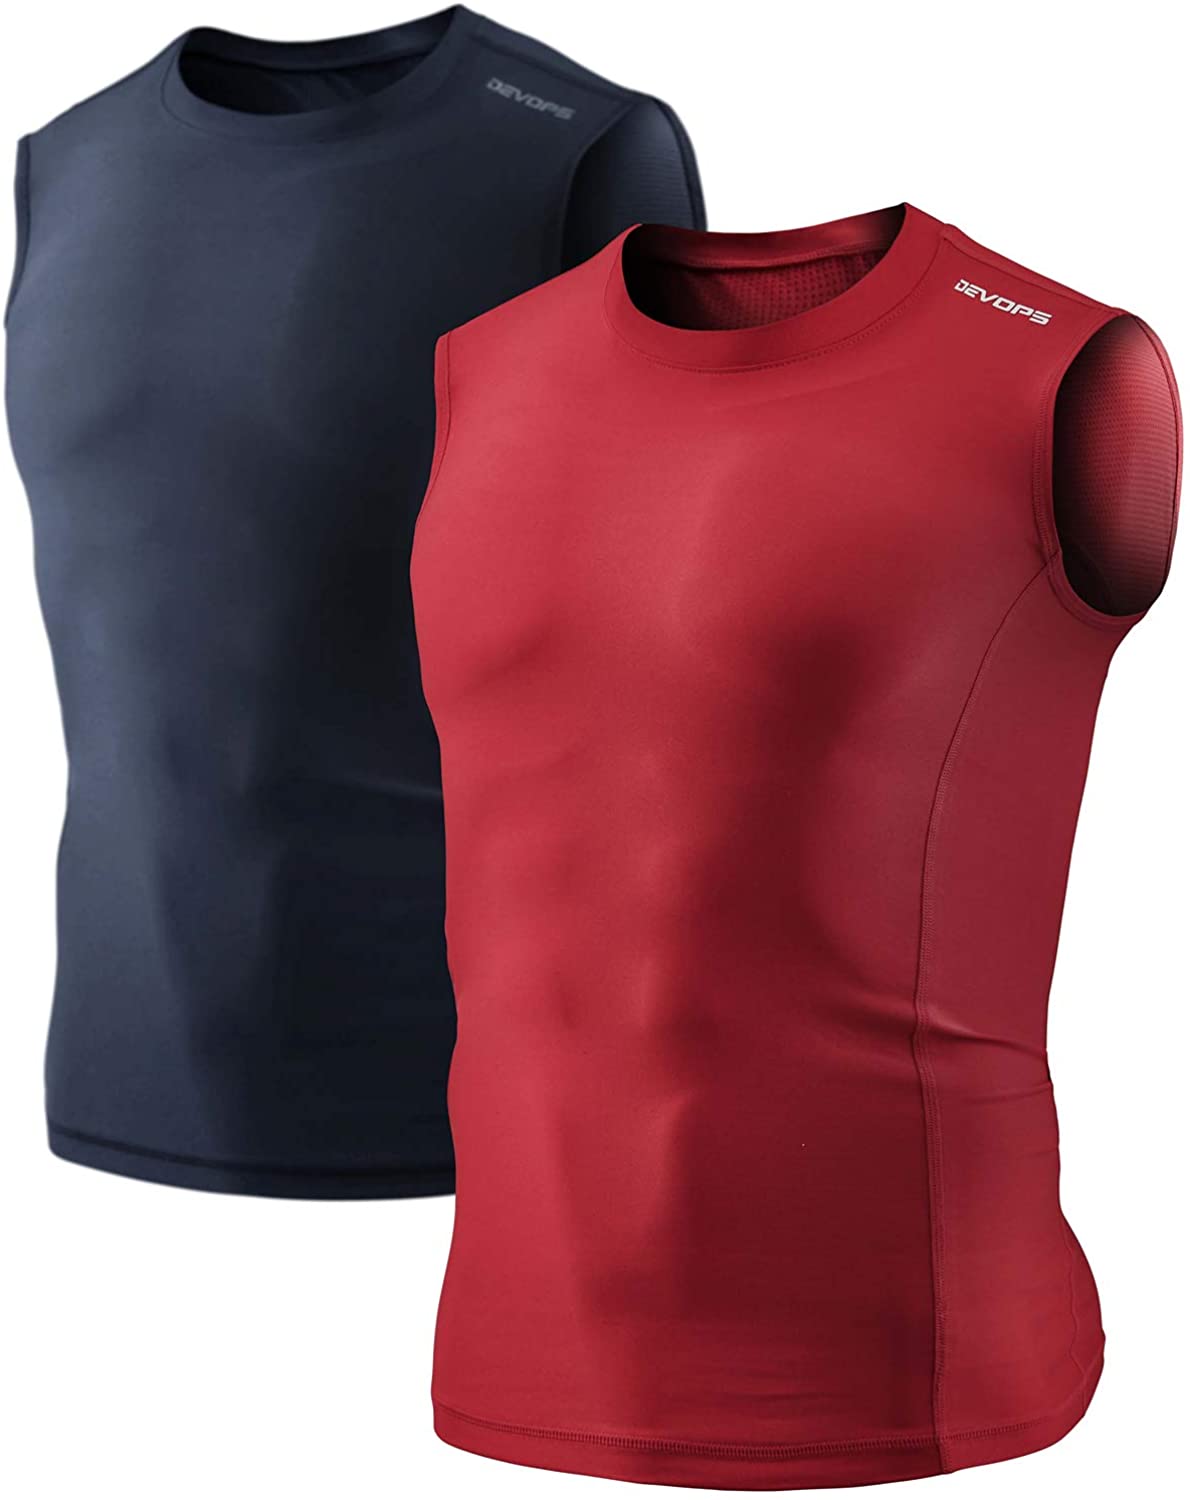  DEVOPS 3 Pack Mens Athletic Compression Shirts Sleeveless